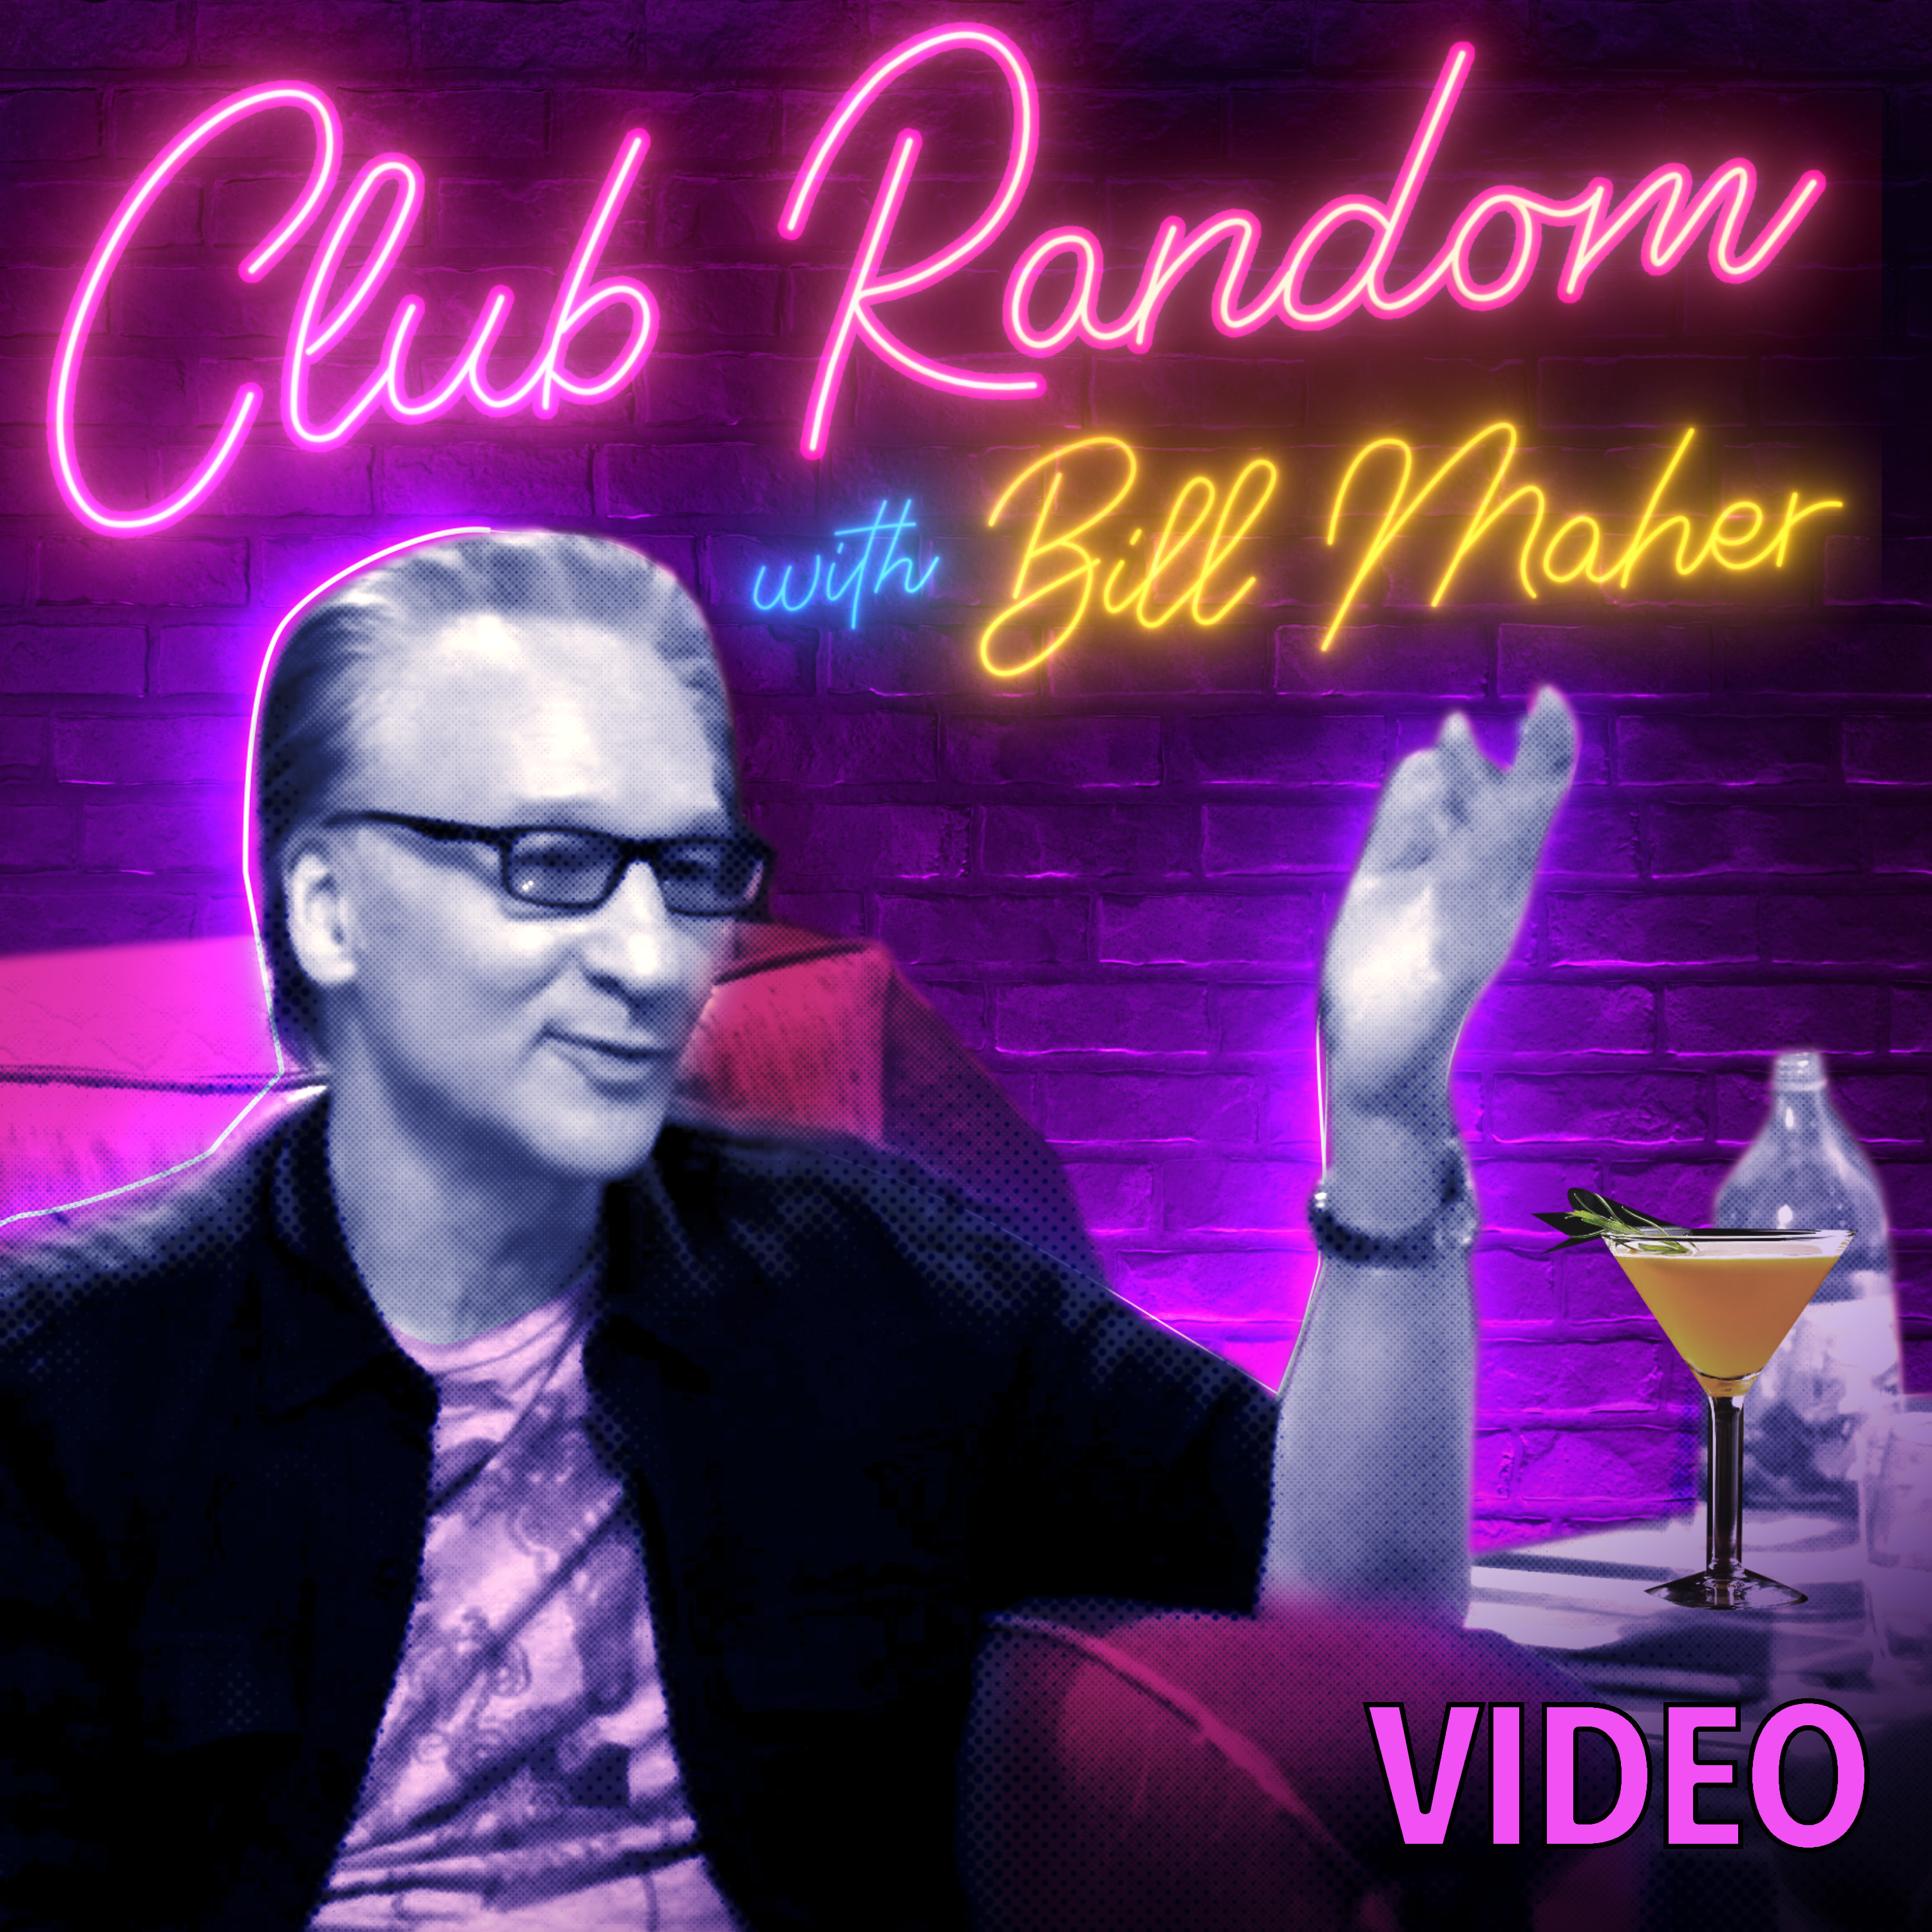 Video: Rainn Wilson | Club Random with Bill Maher